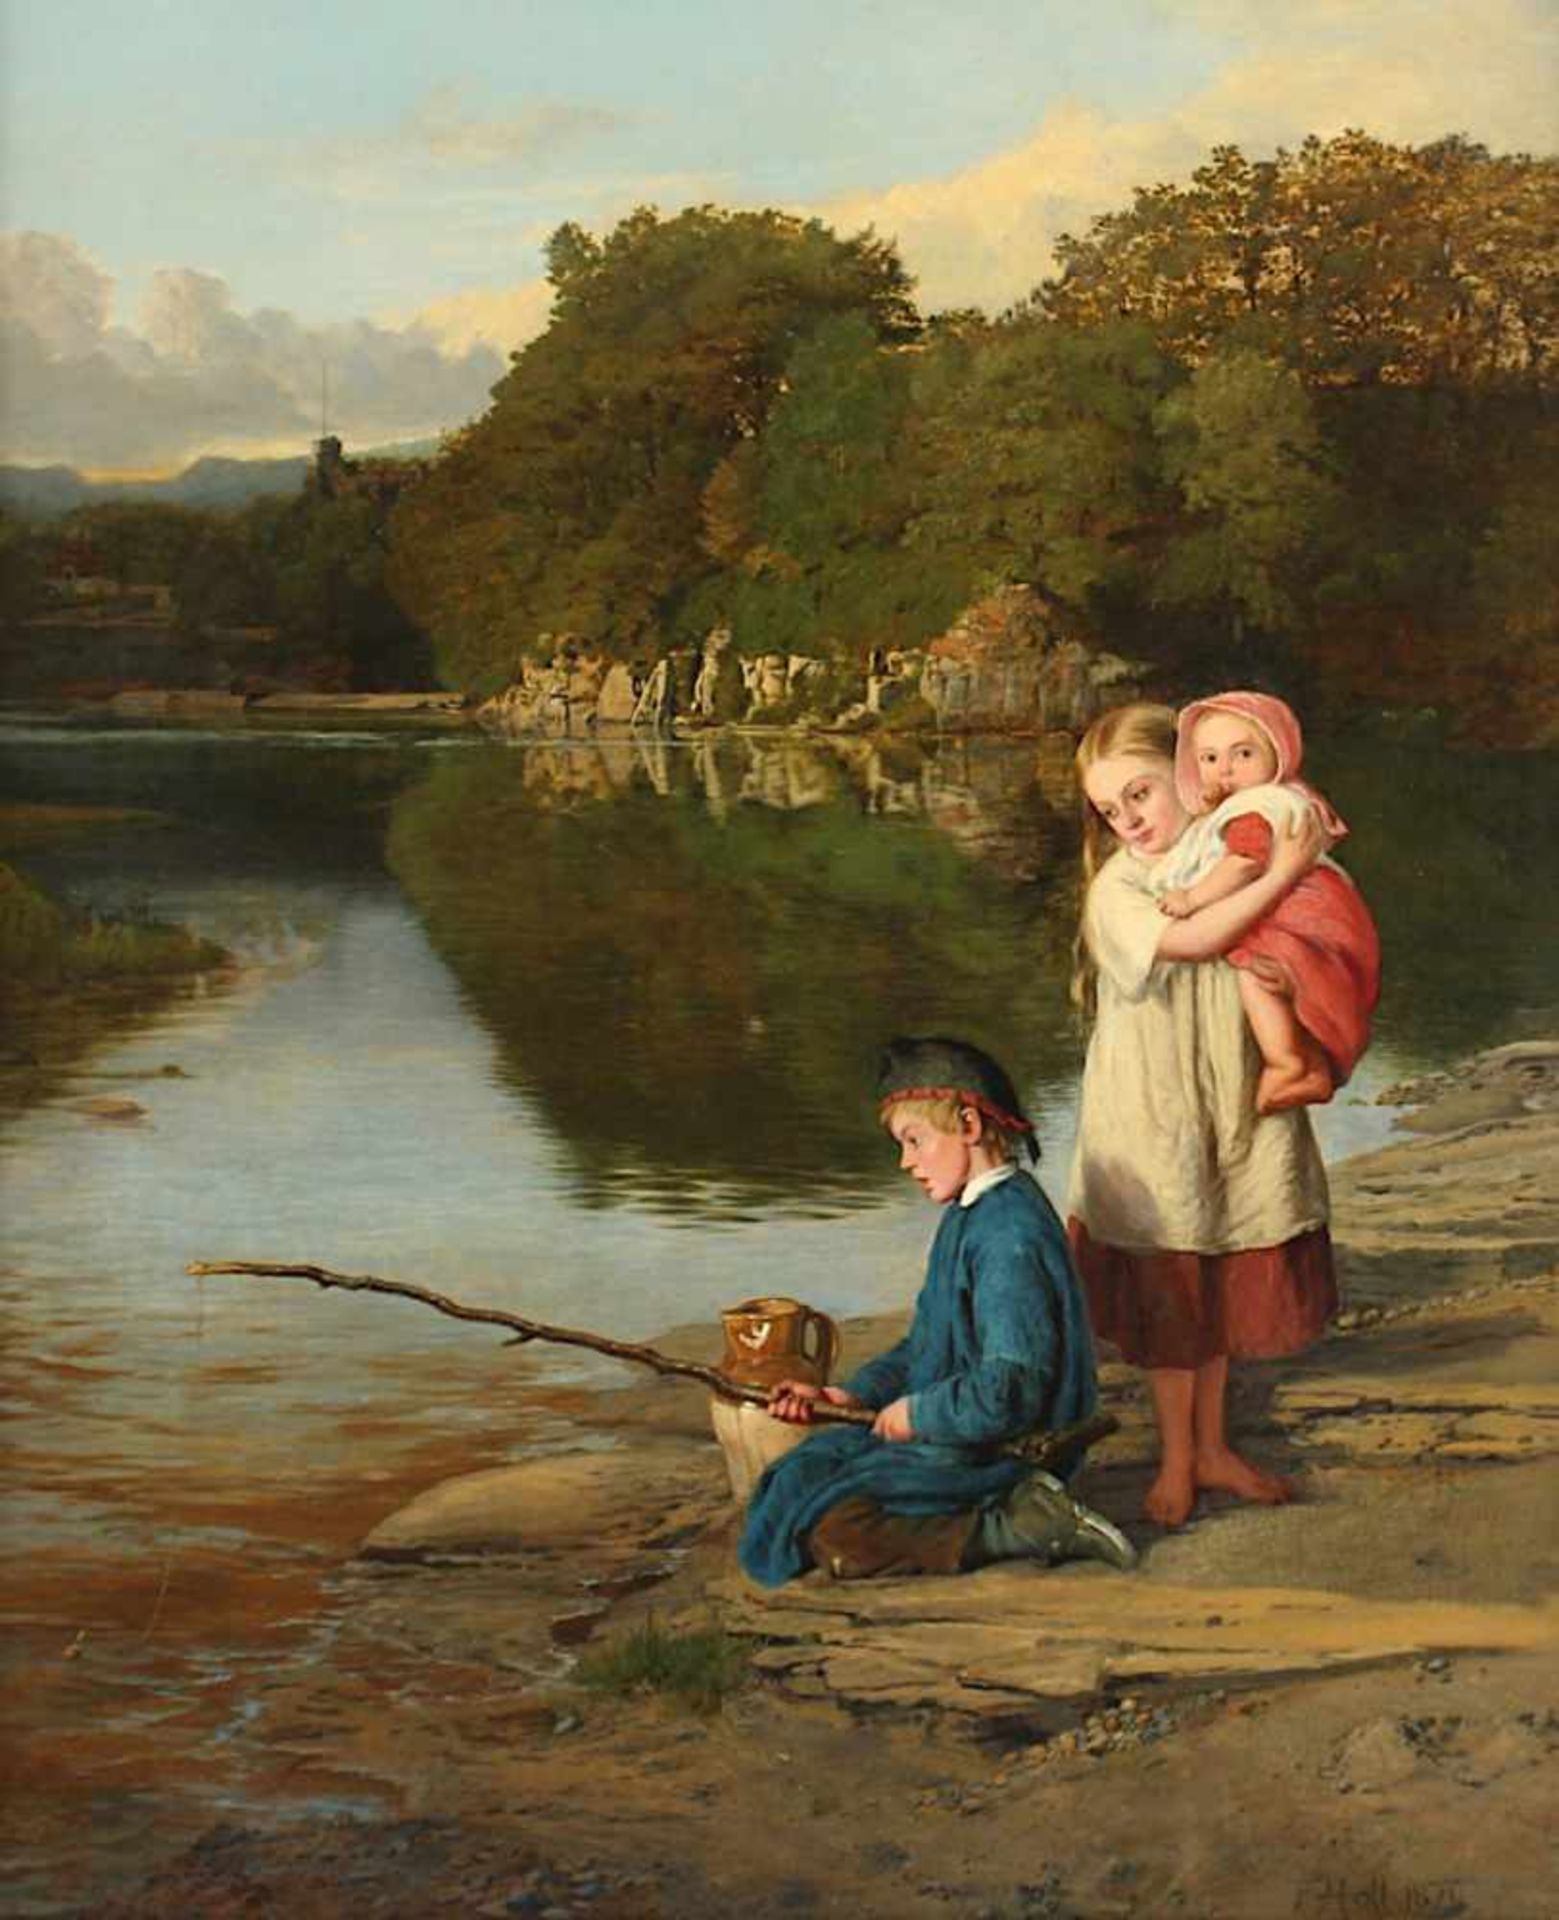 HOLL, Frank Francis Montague (1845-1888), "Angelnde Kinder", Öl/Lwd., 61 x 51, doubliert, unten